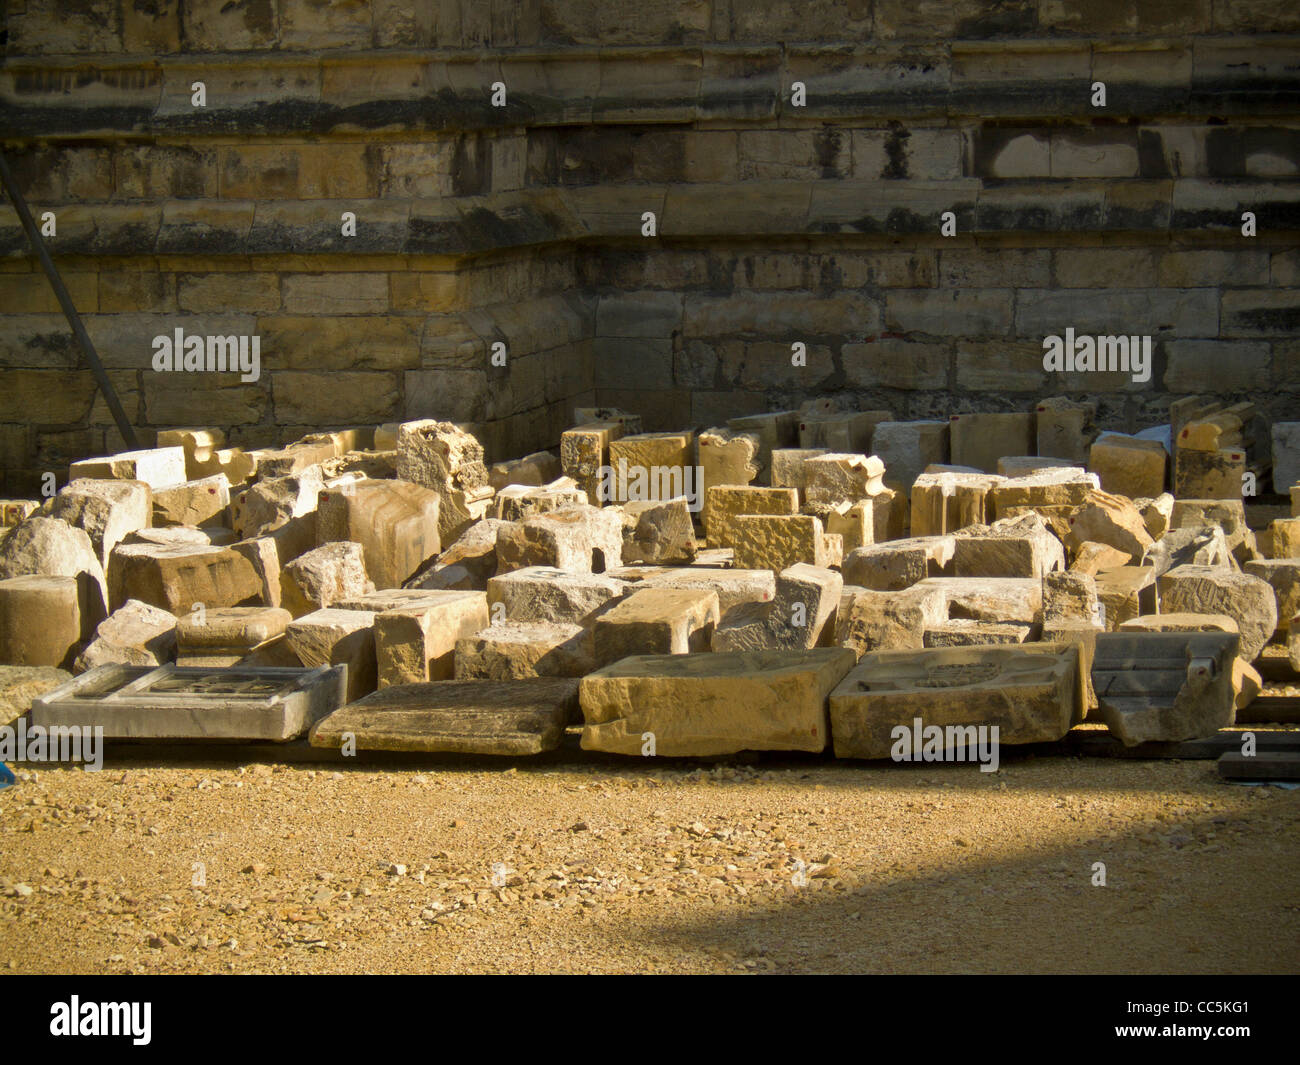 blocks of stone - raw material for stone masons at York Minster, York, UK. Stock Photo